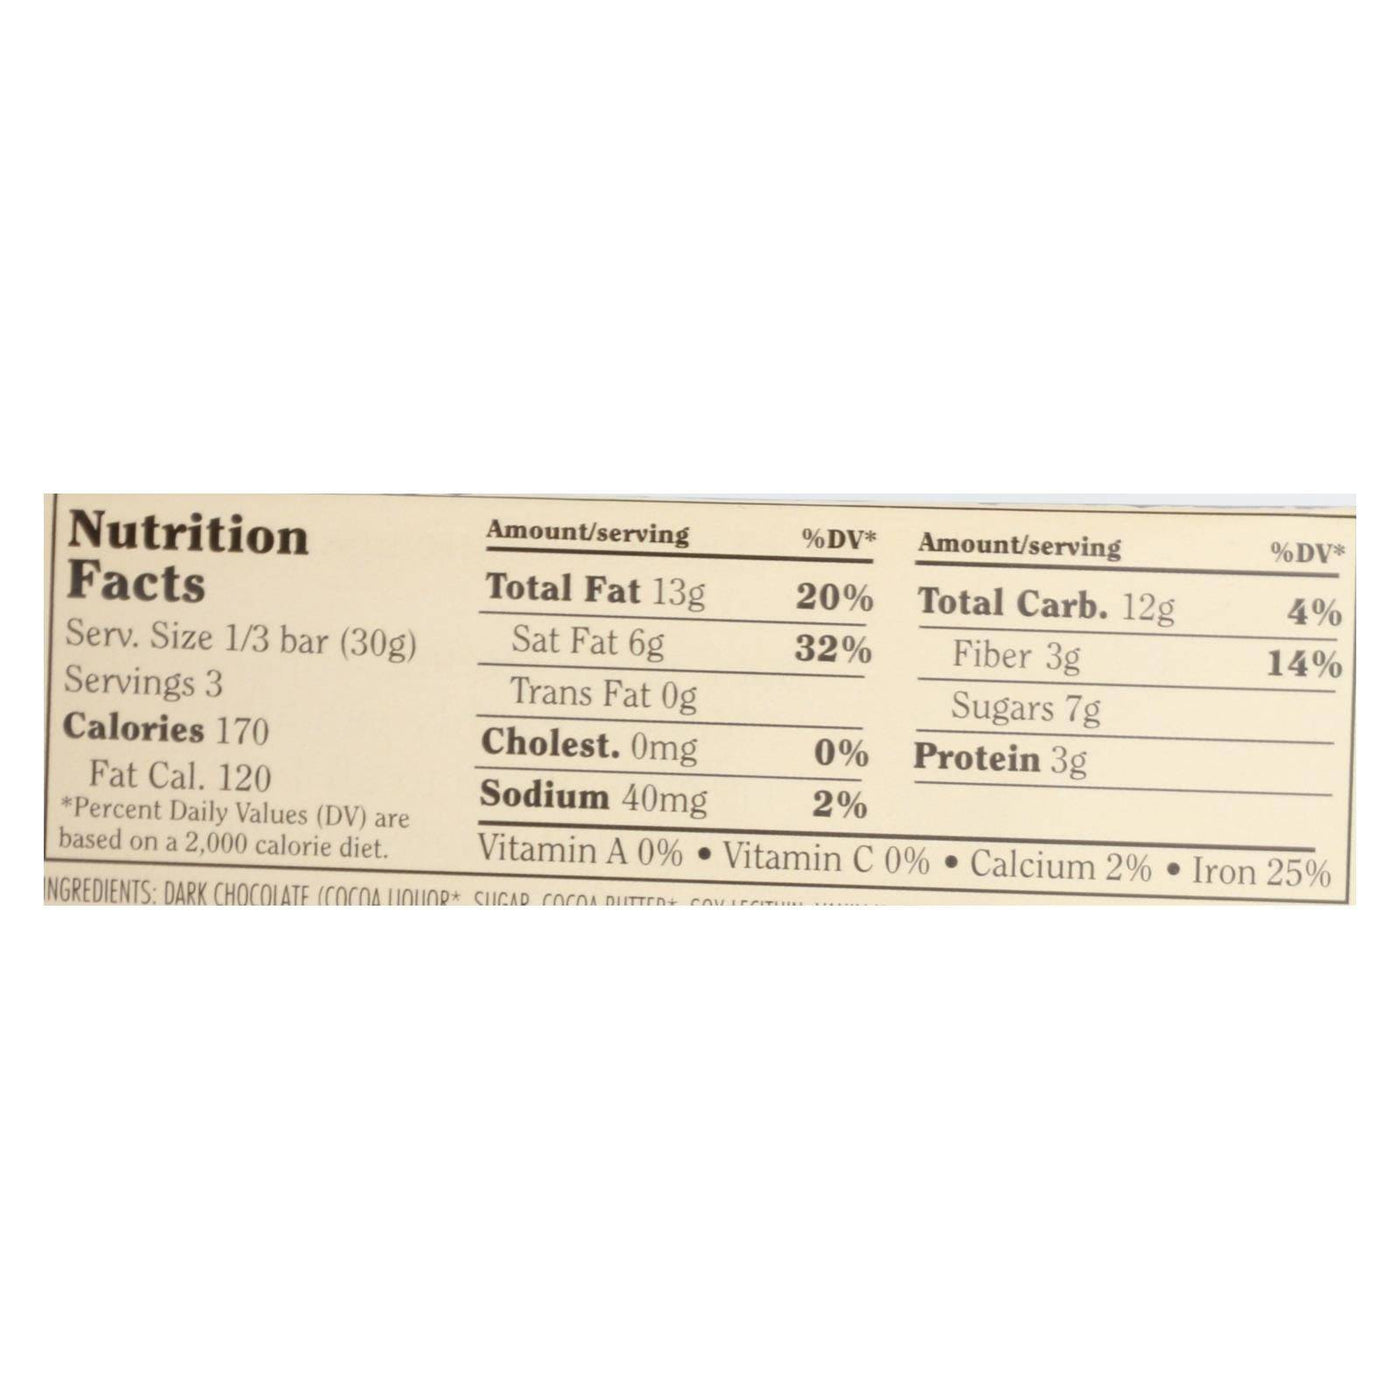 Chocolove Xoxox - Bar - Almond - Sea Salt - 70% Dark Chocolate - Case Of 12 - 3.2 Oz | OnlyNaturals.us